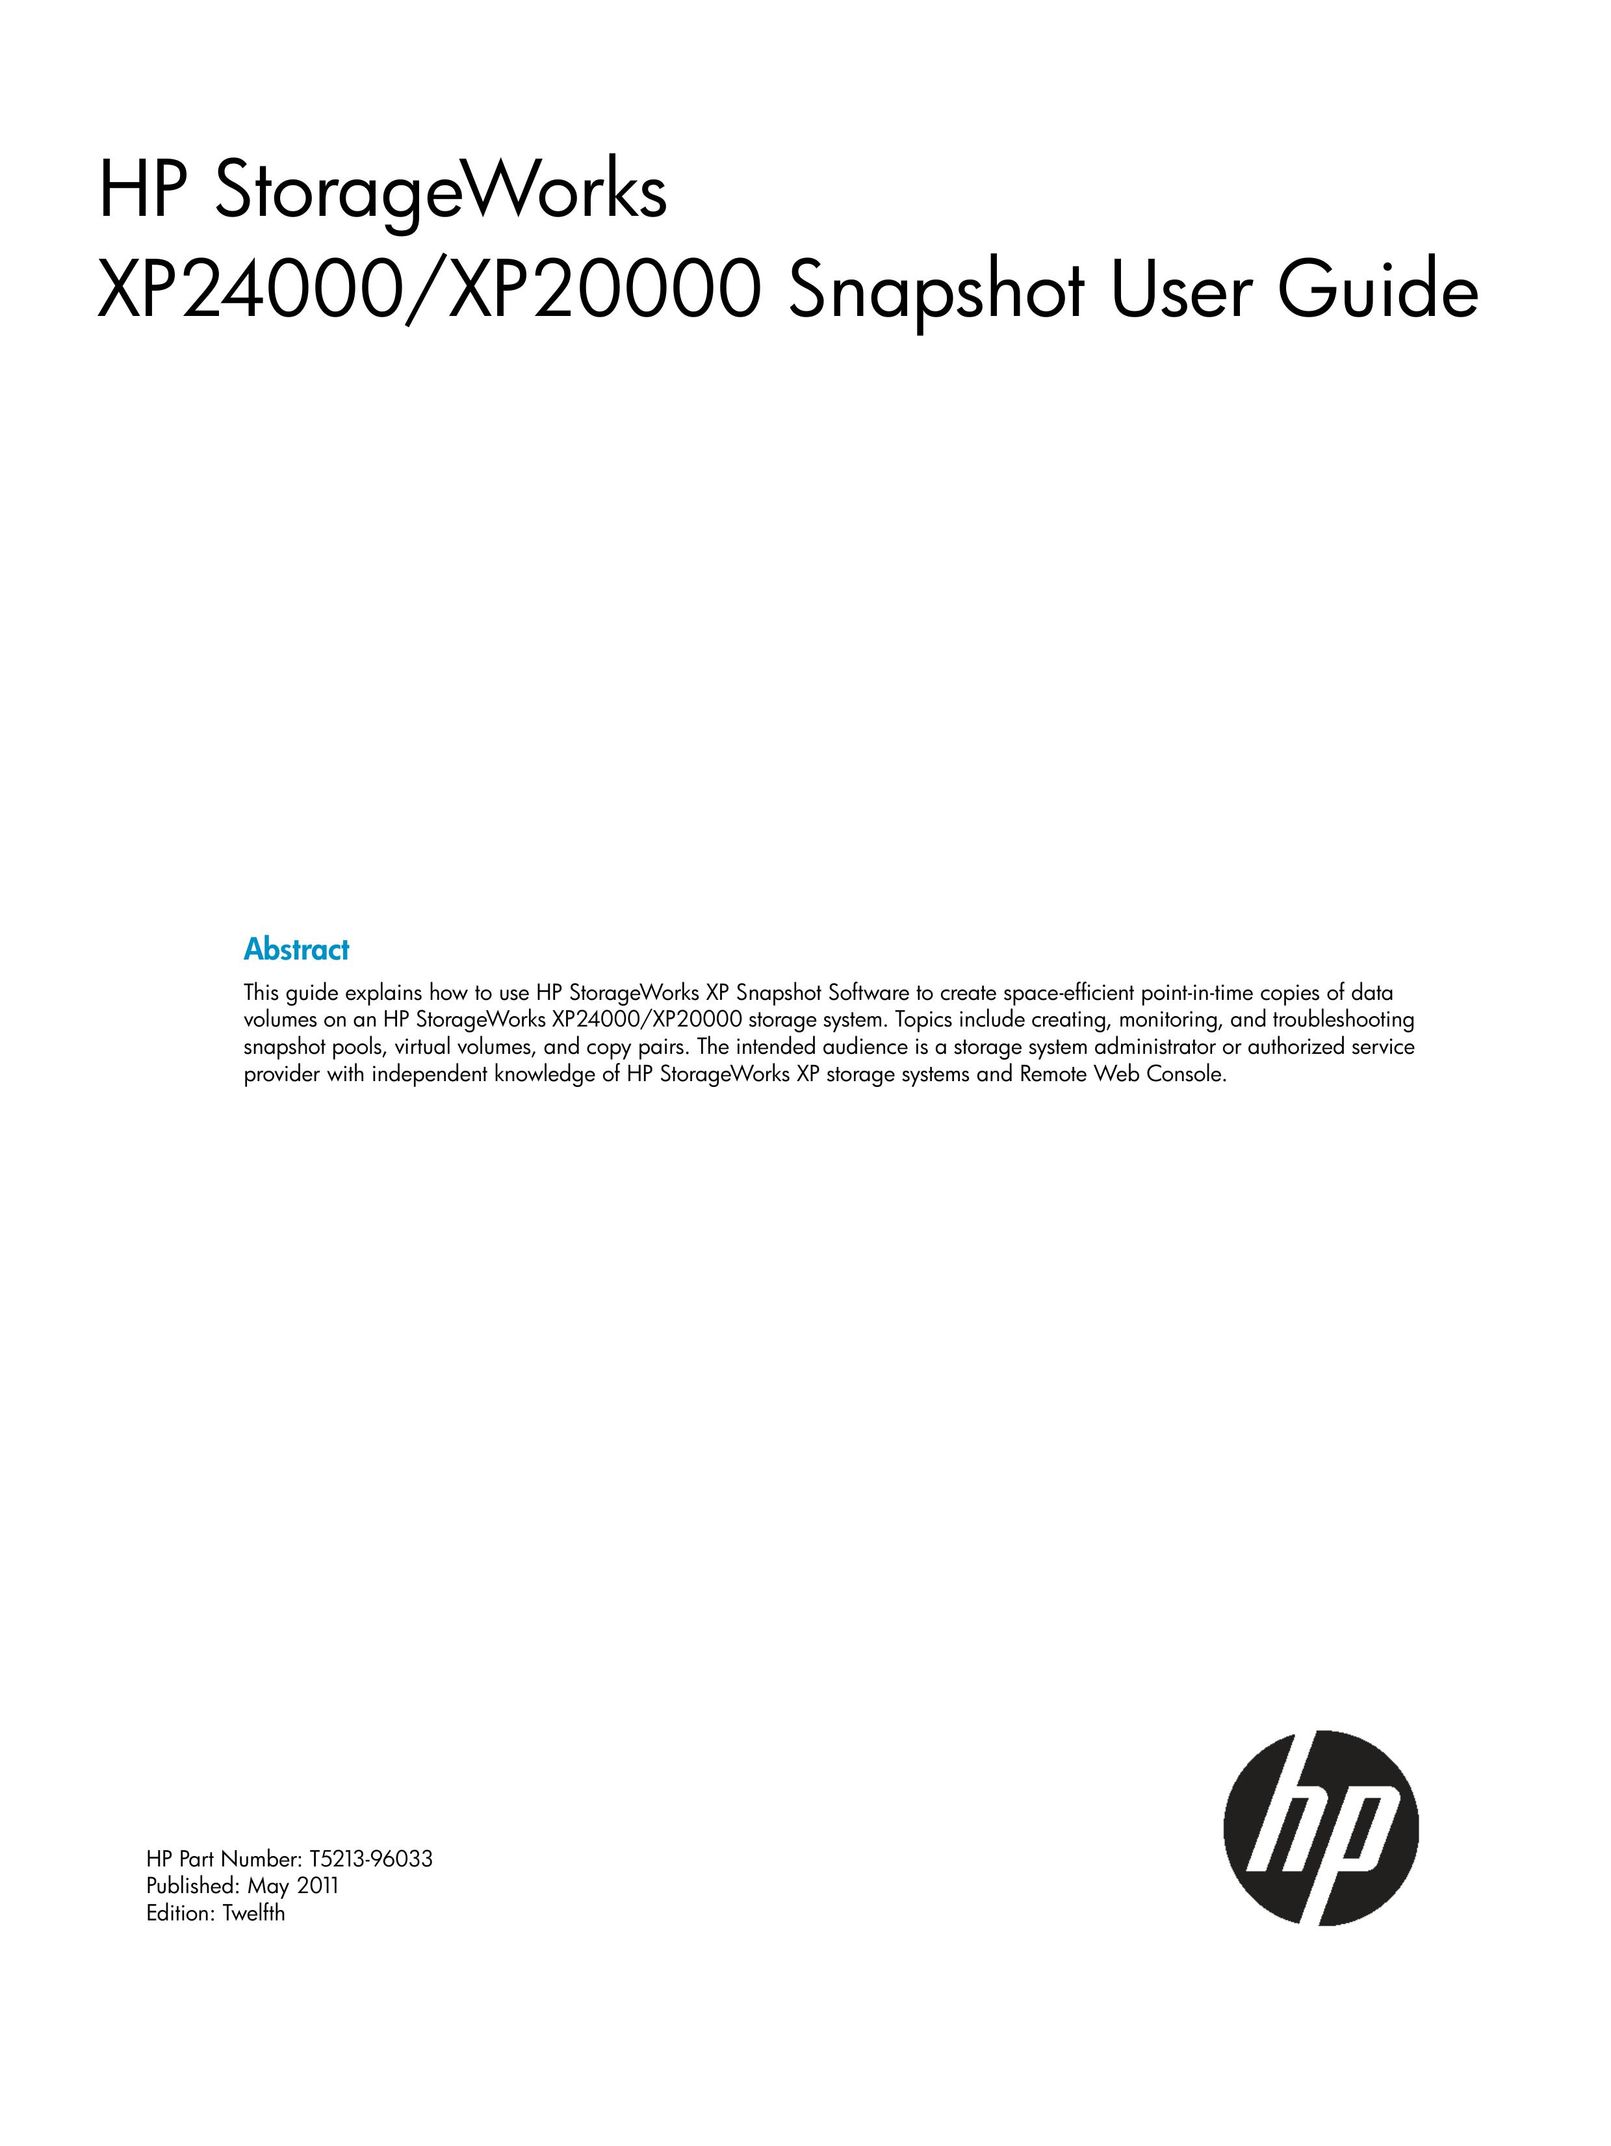 HP (Hewlett-Packard) XP20000 Portable Media Storage User Manual